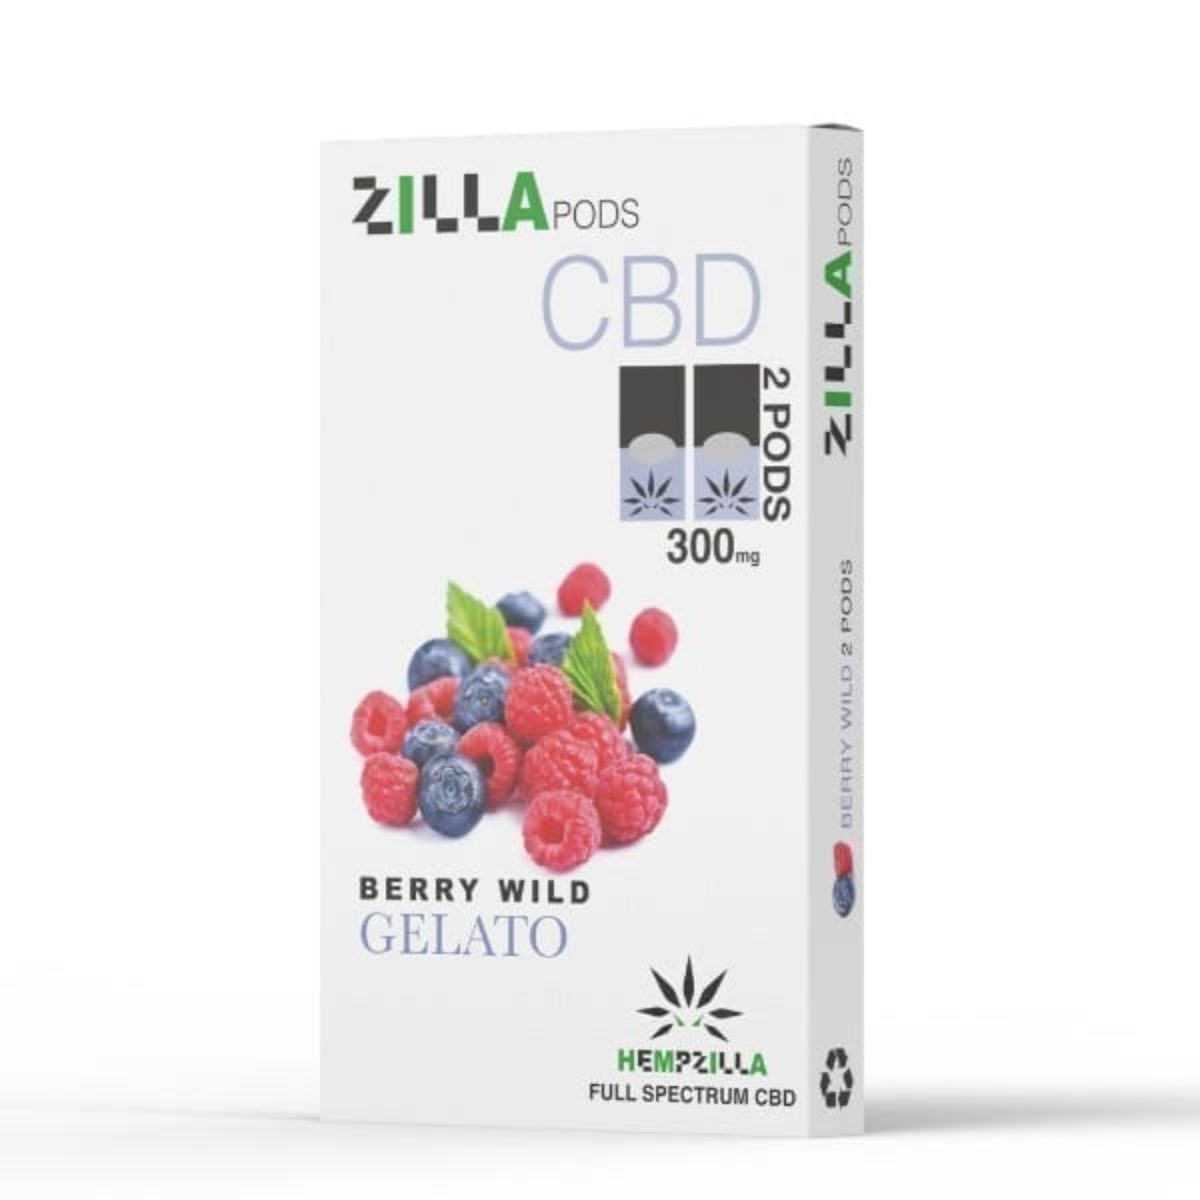 Hempzilla CBD Juul Compatible Pods 300mg 2-Pack | Berry Wild Gelato